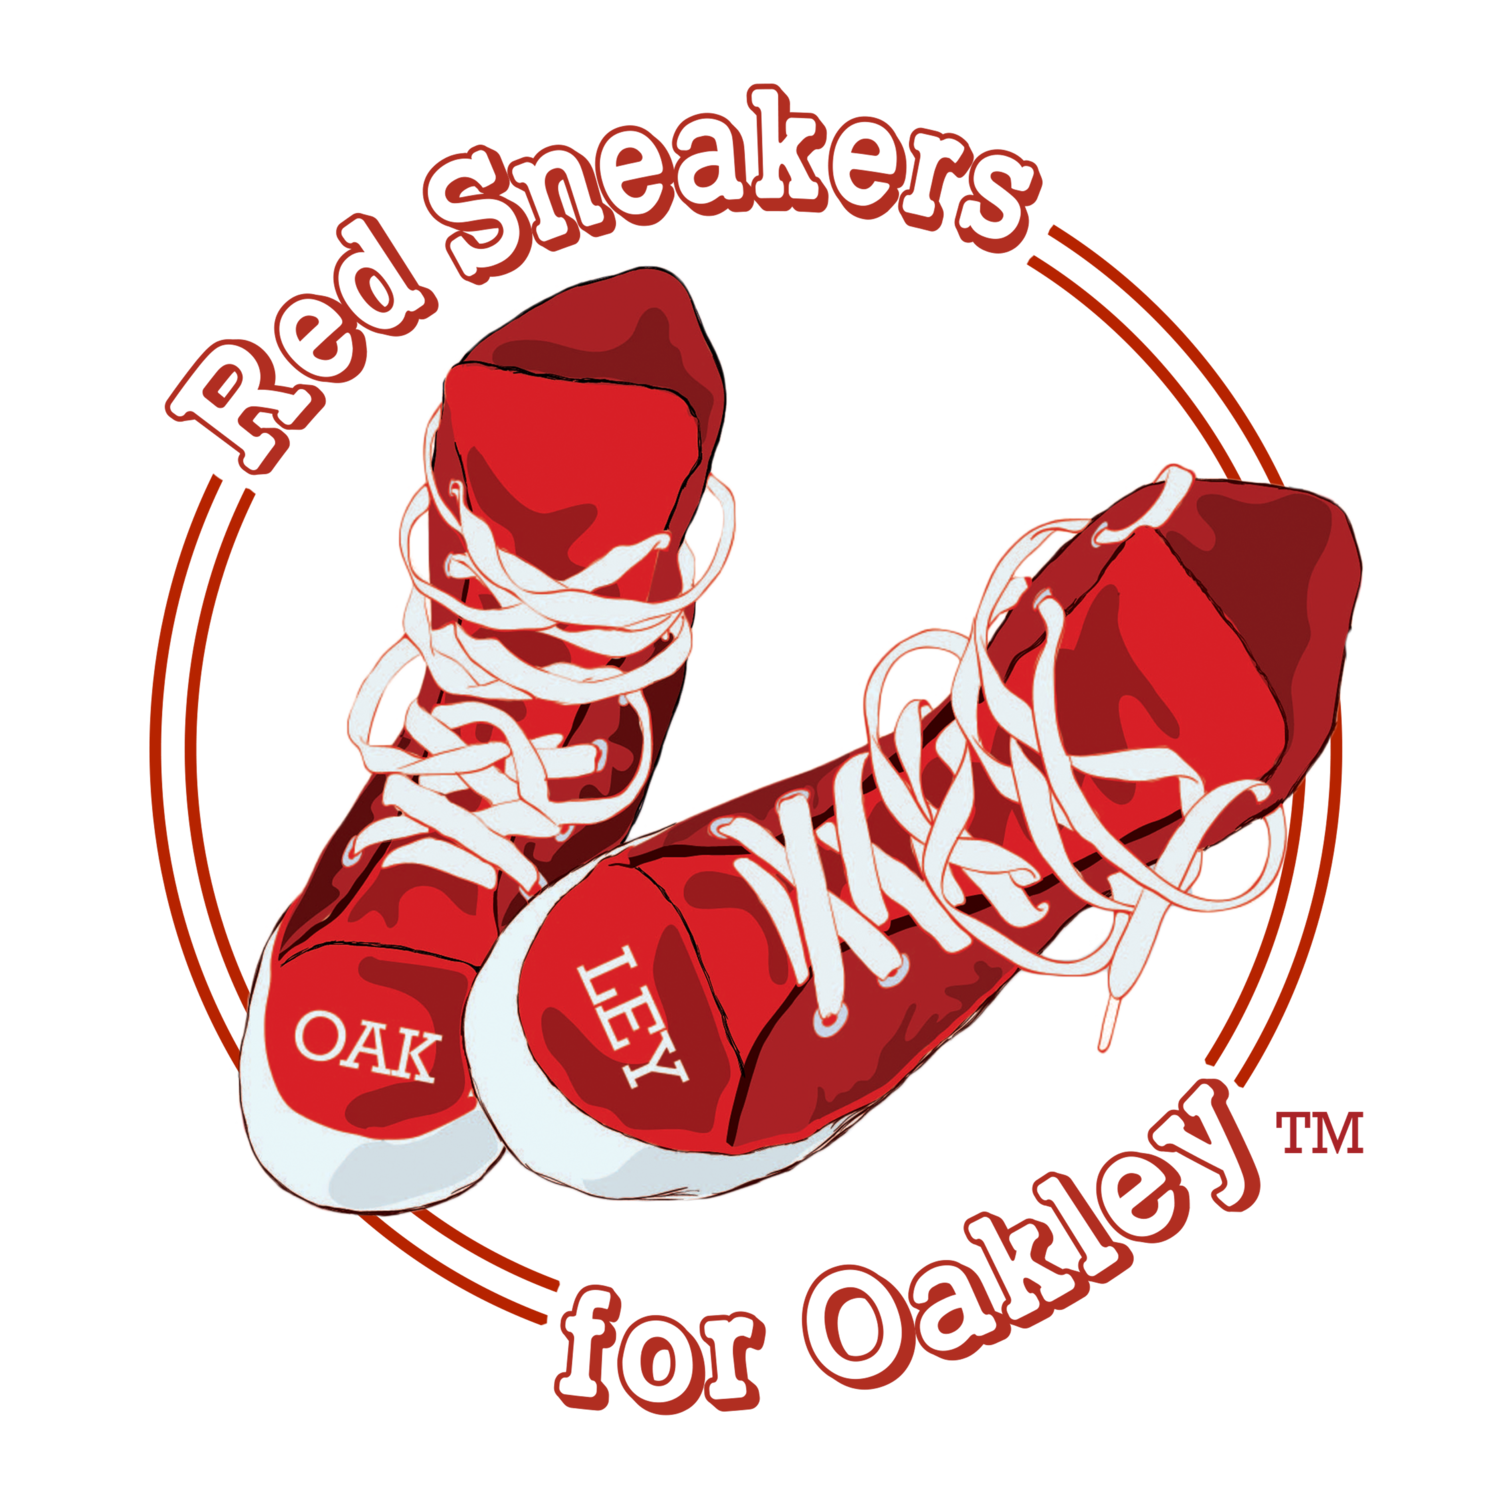 Red Sneakers for Oakley logo